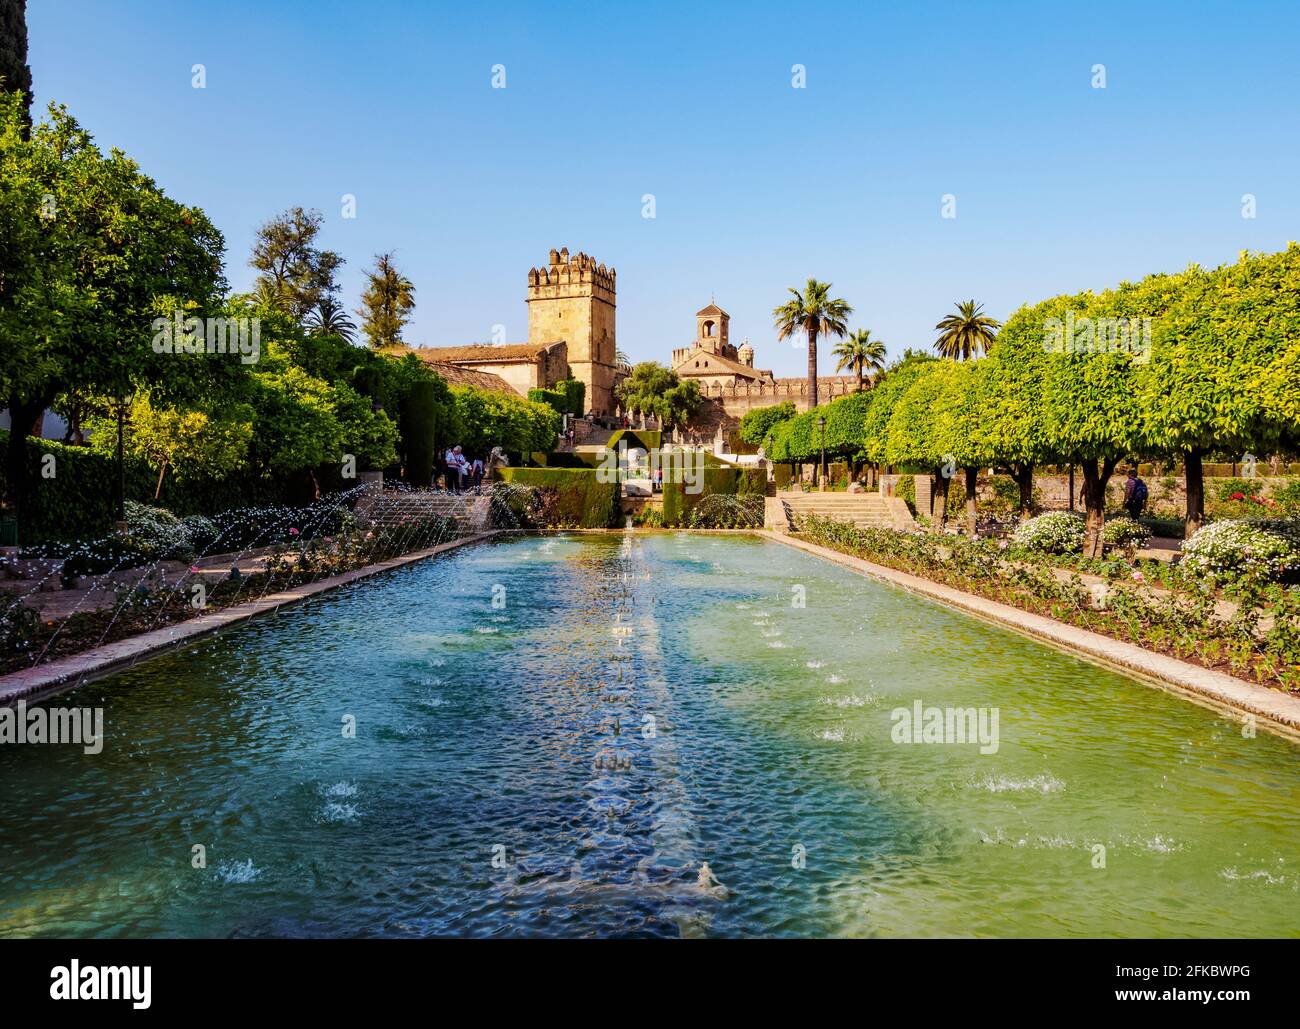 Gardens of Alcazar de los Reyes Cristianos (Alcazar of the Christian Monarchs), UNESCO World Heritage Site, Cordoba, Andalusia, Spain, Europe Stock Photo